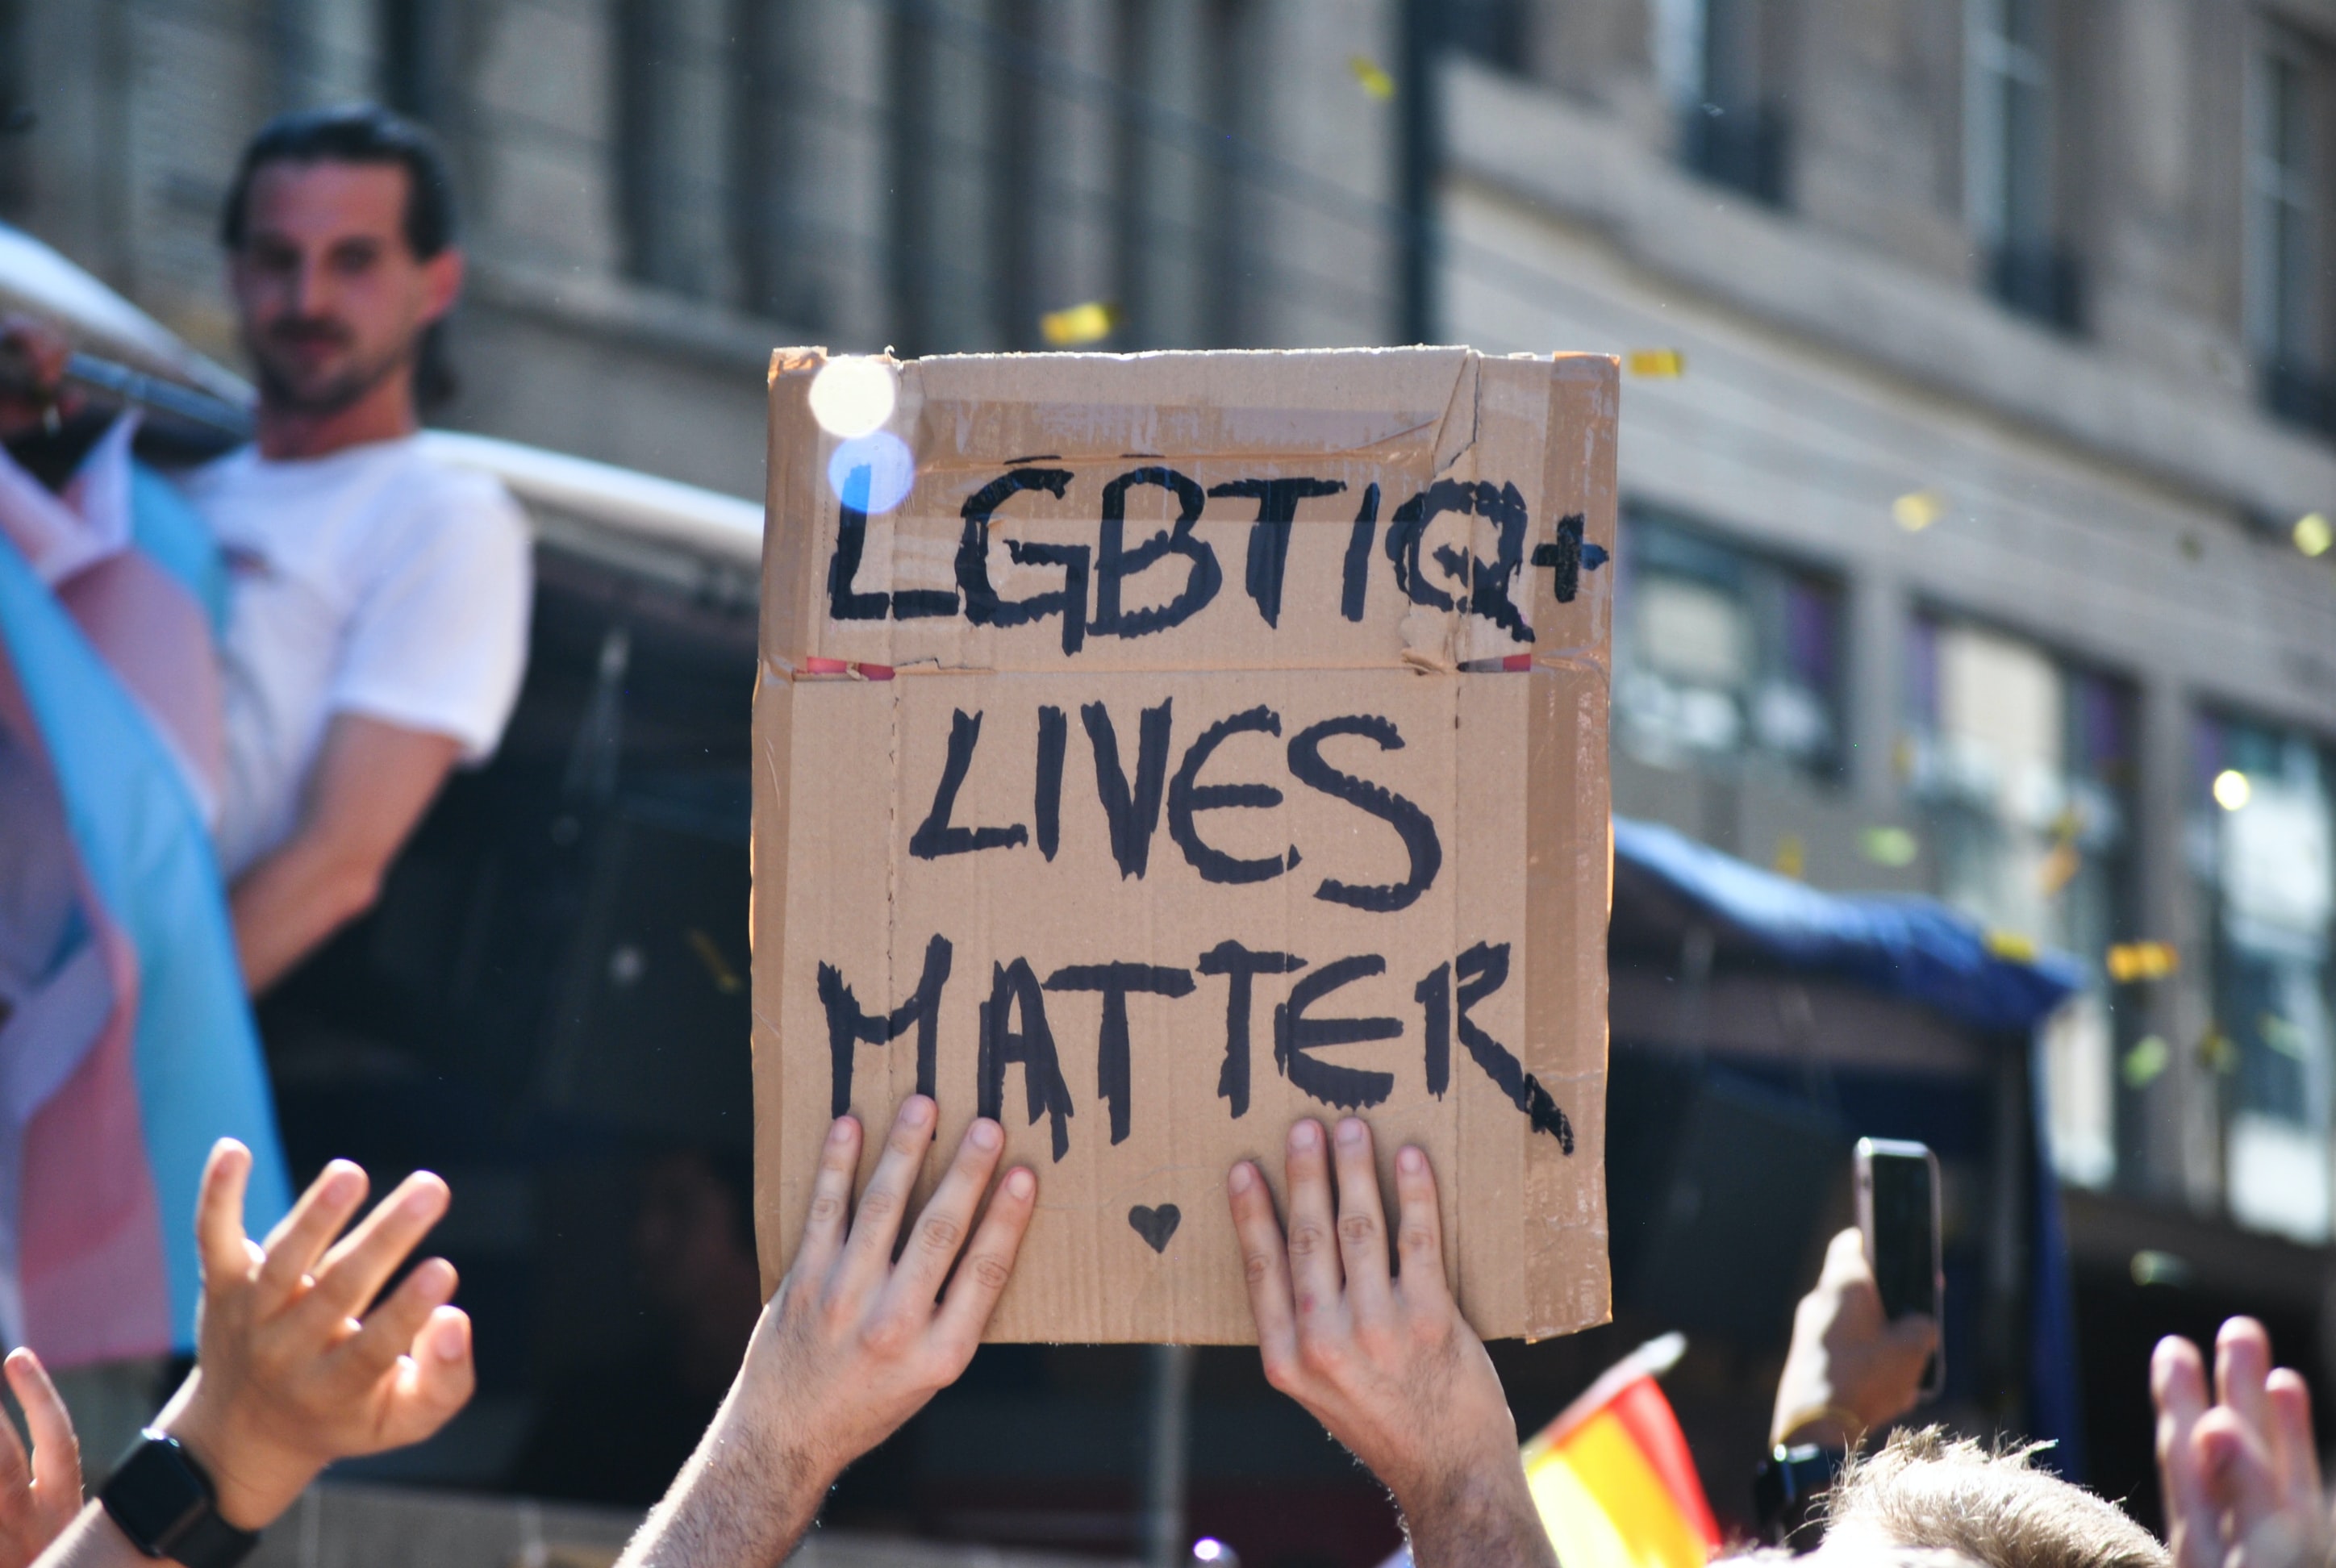 LGBTQ+ Lives Matter